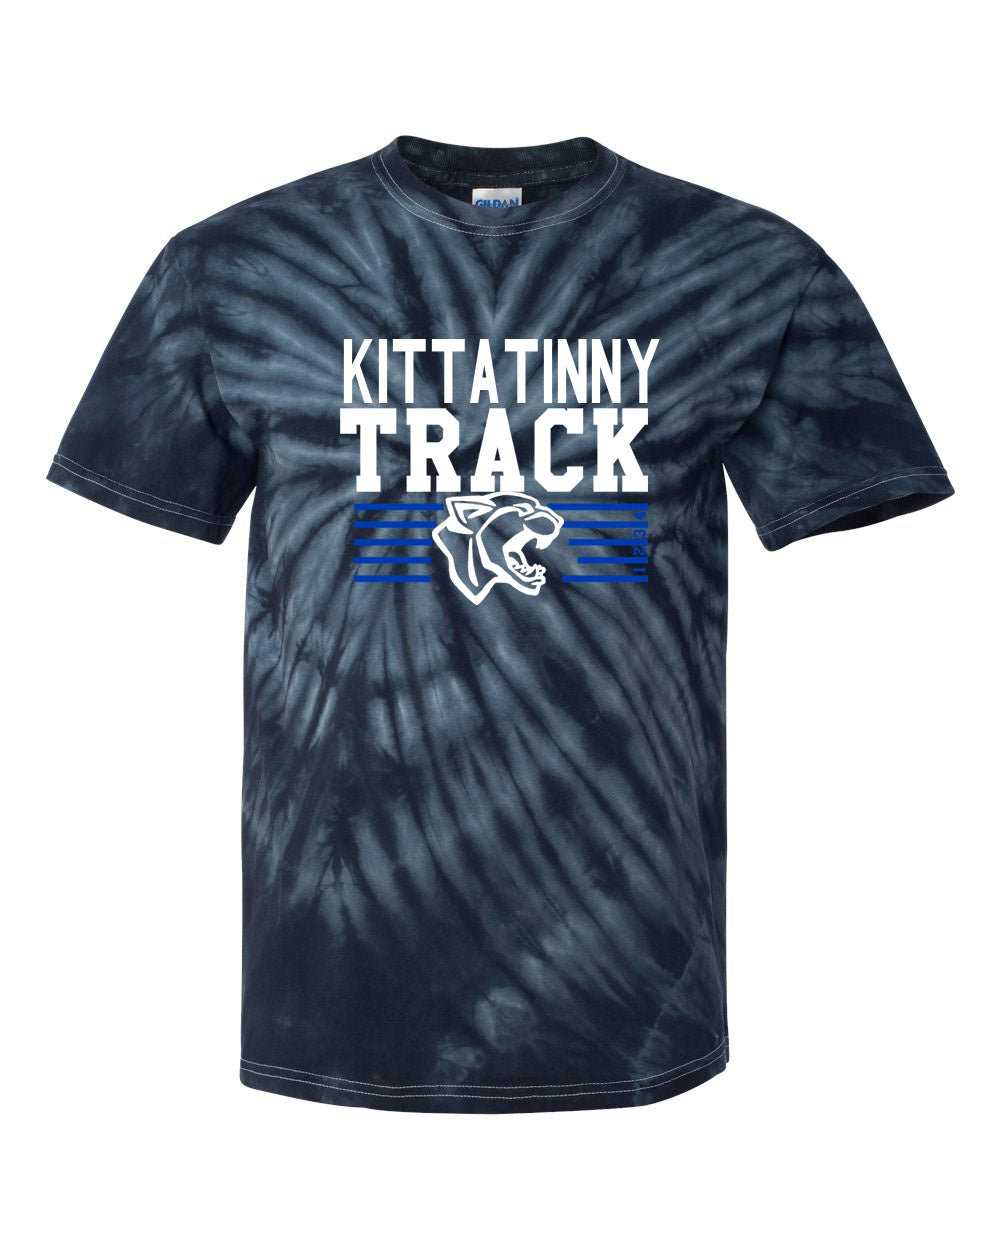 Kittatinny Track Tie Dye t-shirt Design 5